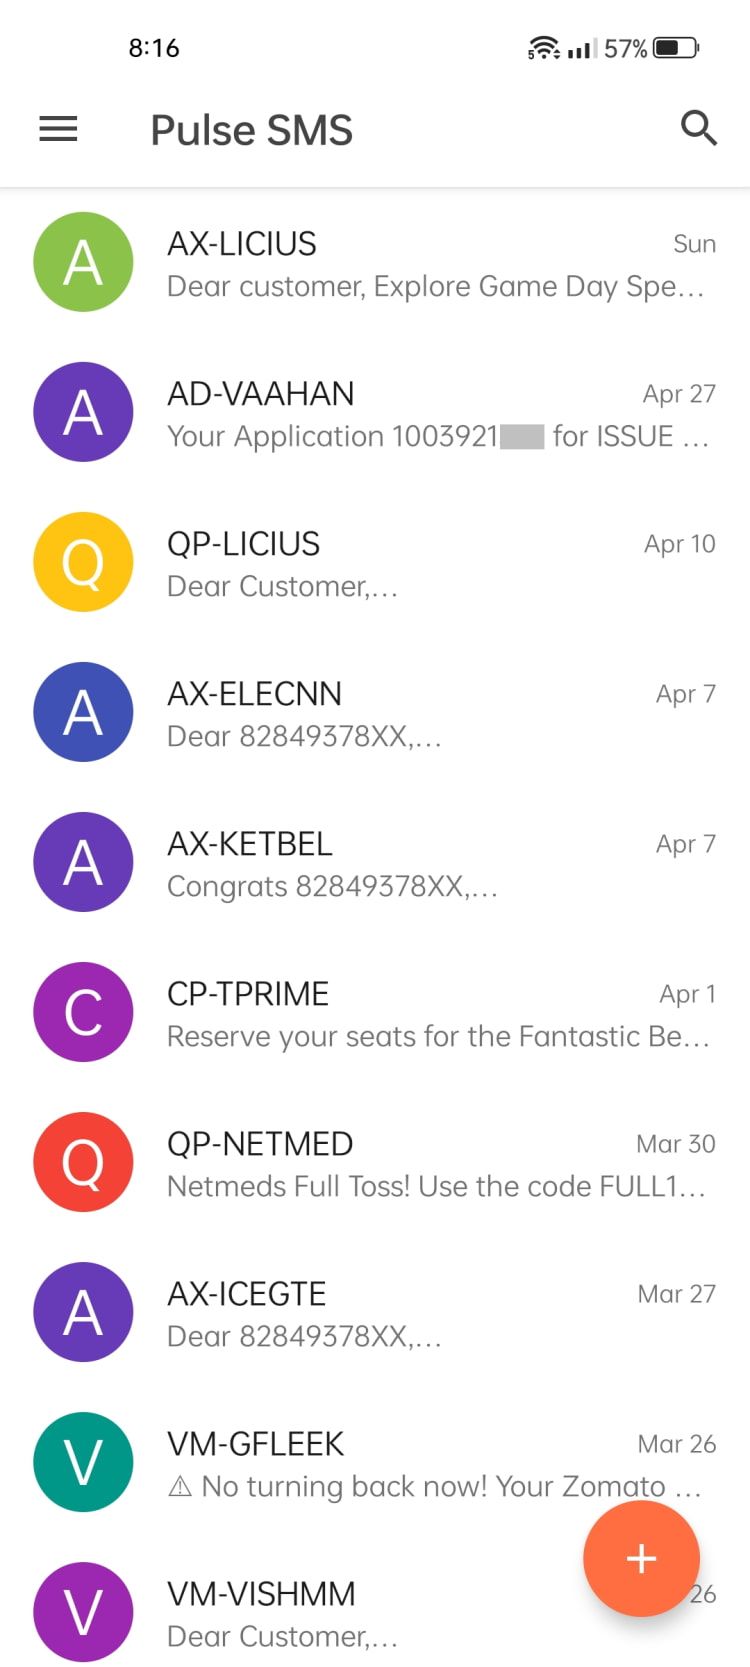 Pulse SMS App Home